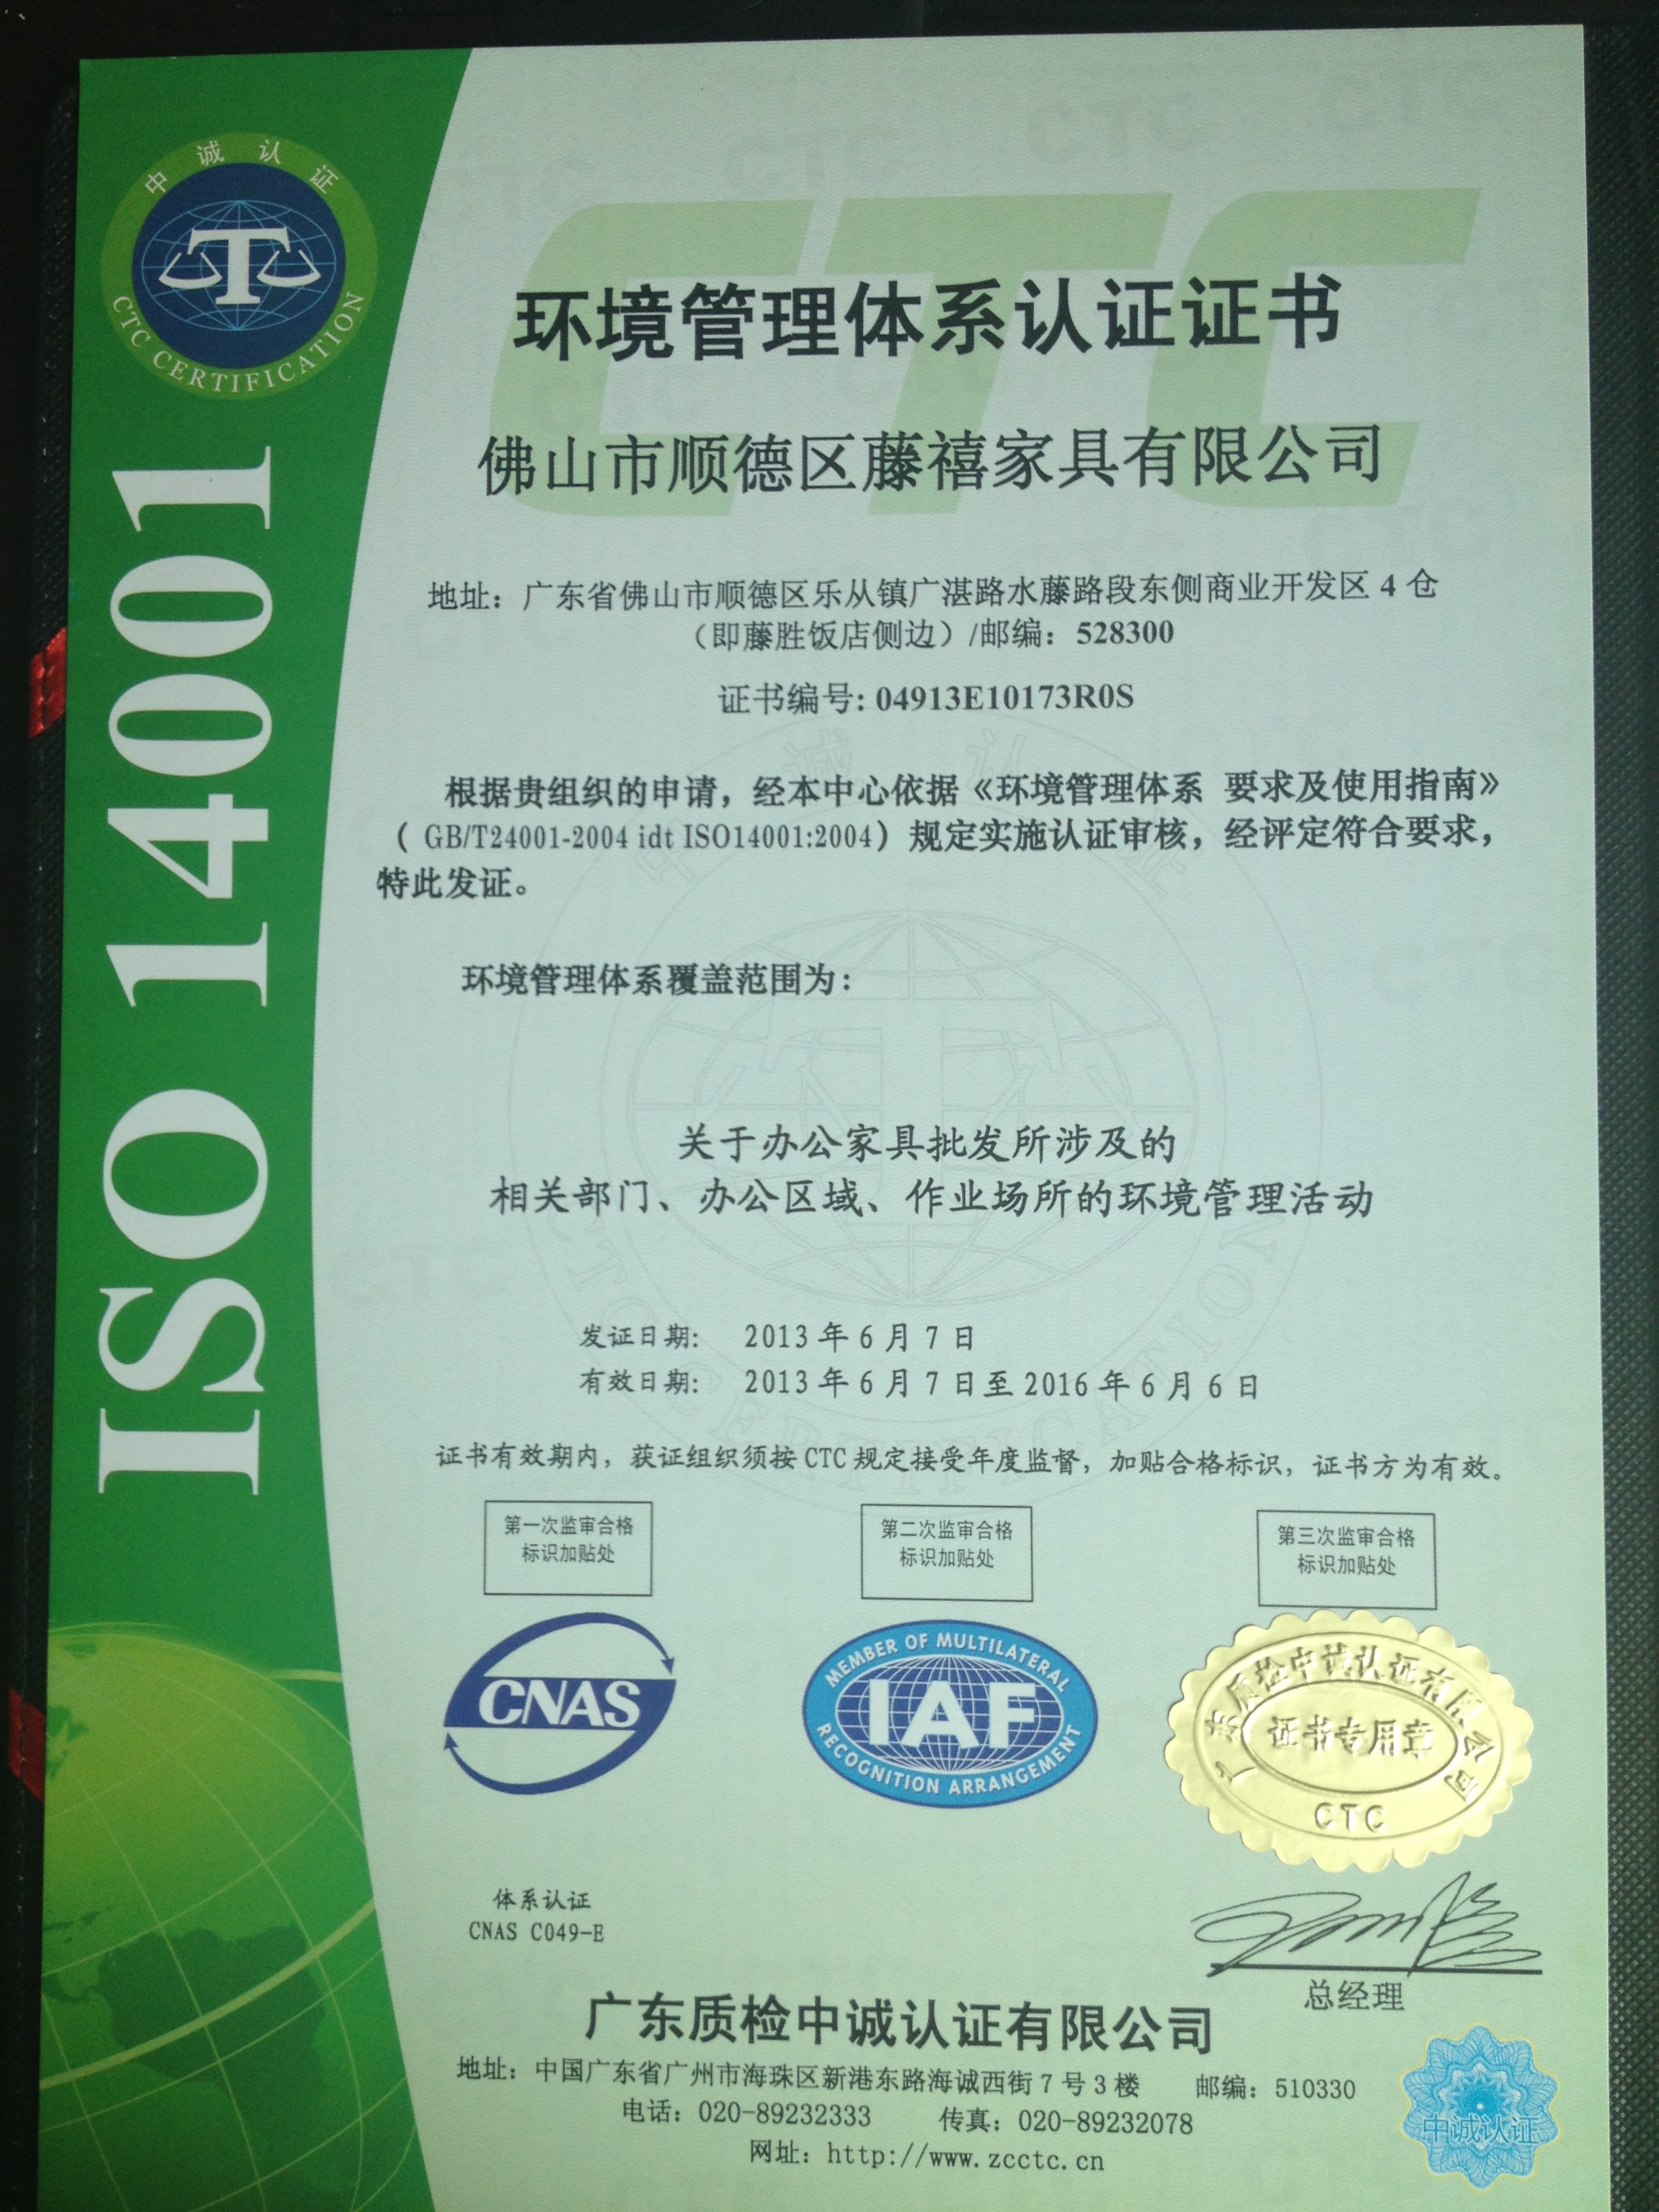 iso9001认证批发